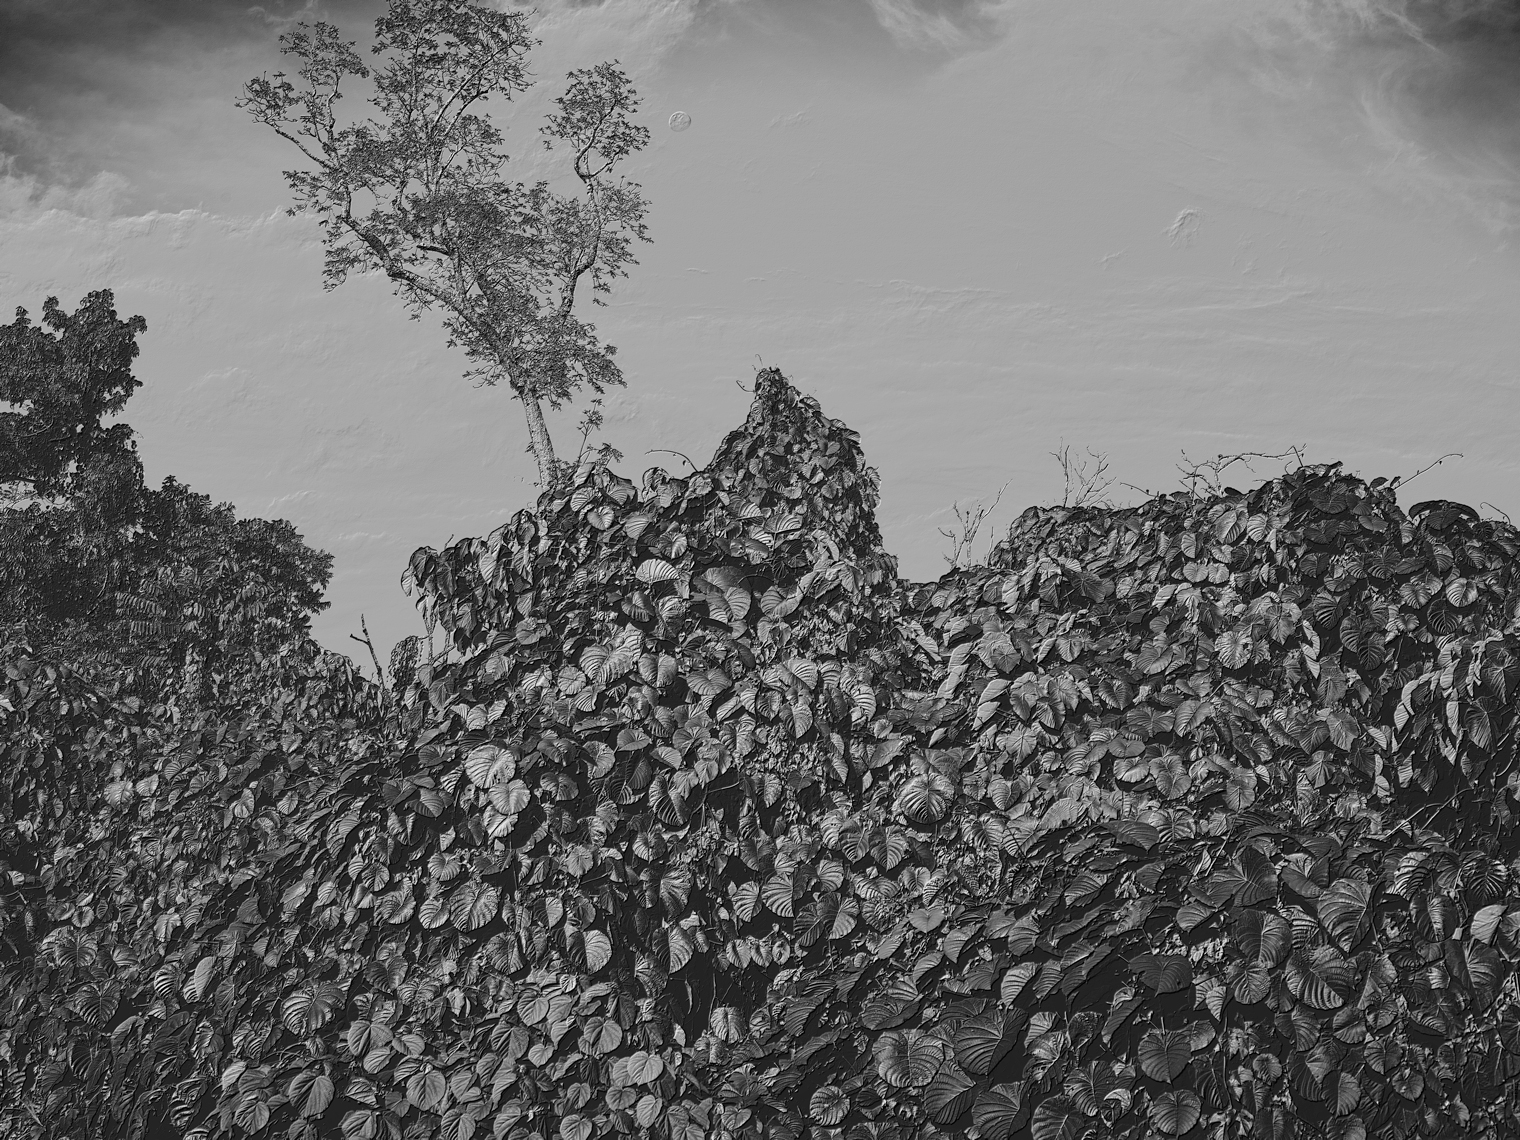 Jon Wyatt Photography - Fault Line III - A tsunami of vegetation - invasive vines in samoa